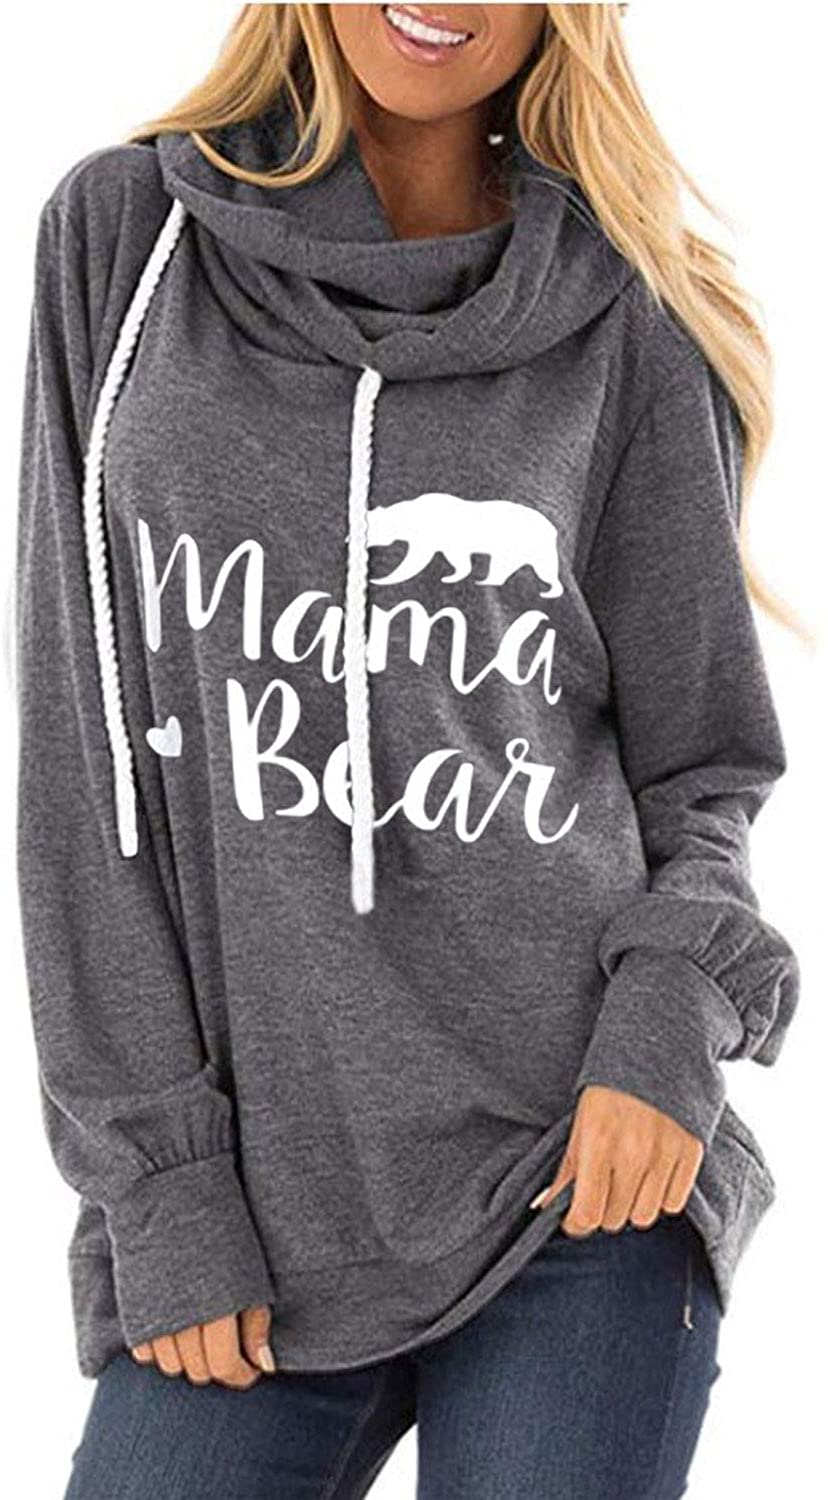 ALBIZIA Long Sleeve Sweatshirt for Women Mama Bear Printed Pullover Hoodie Tunic Top